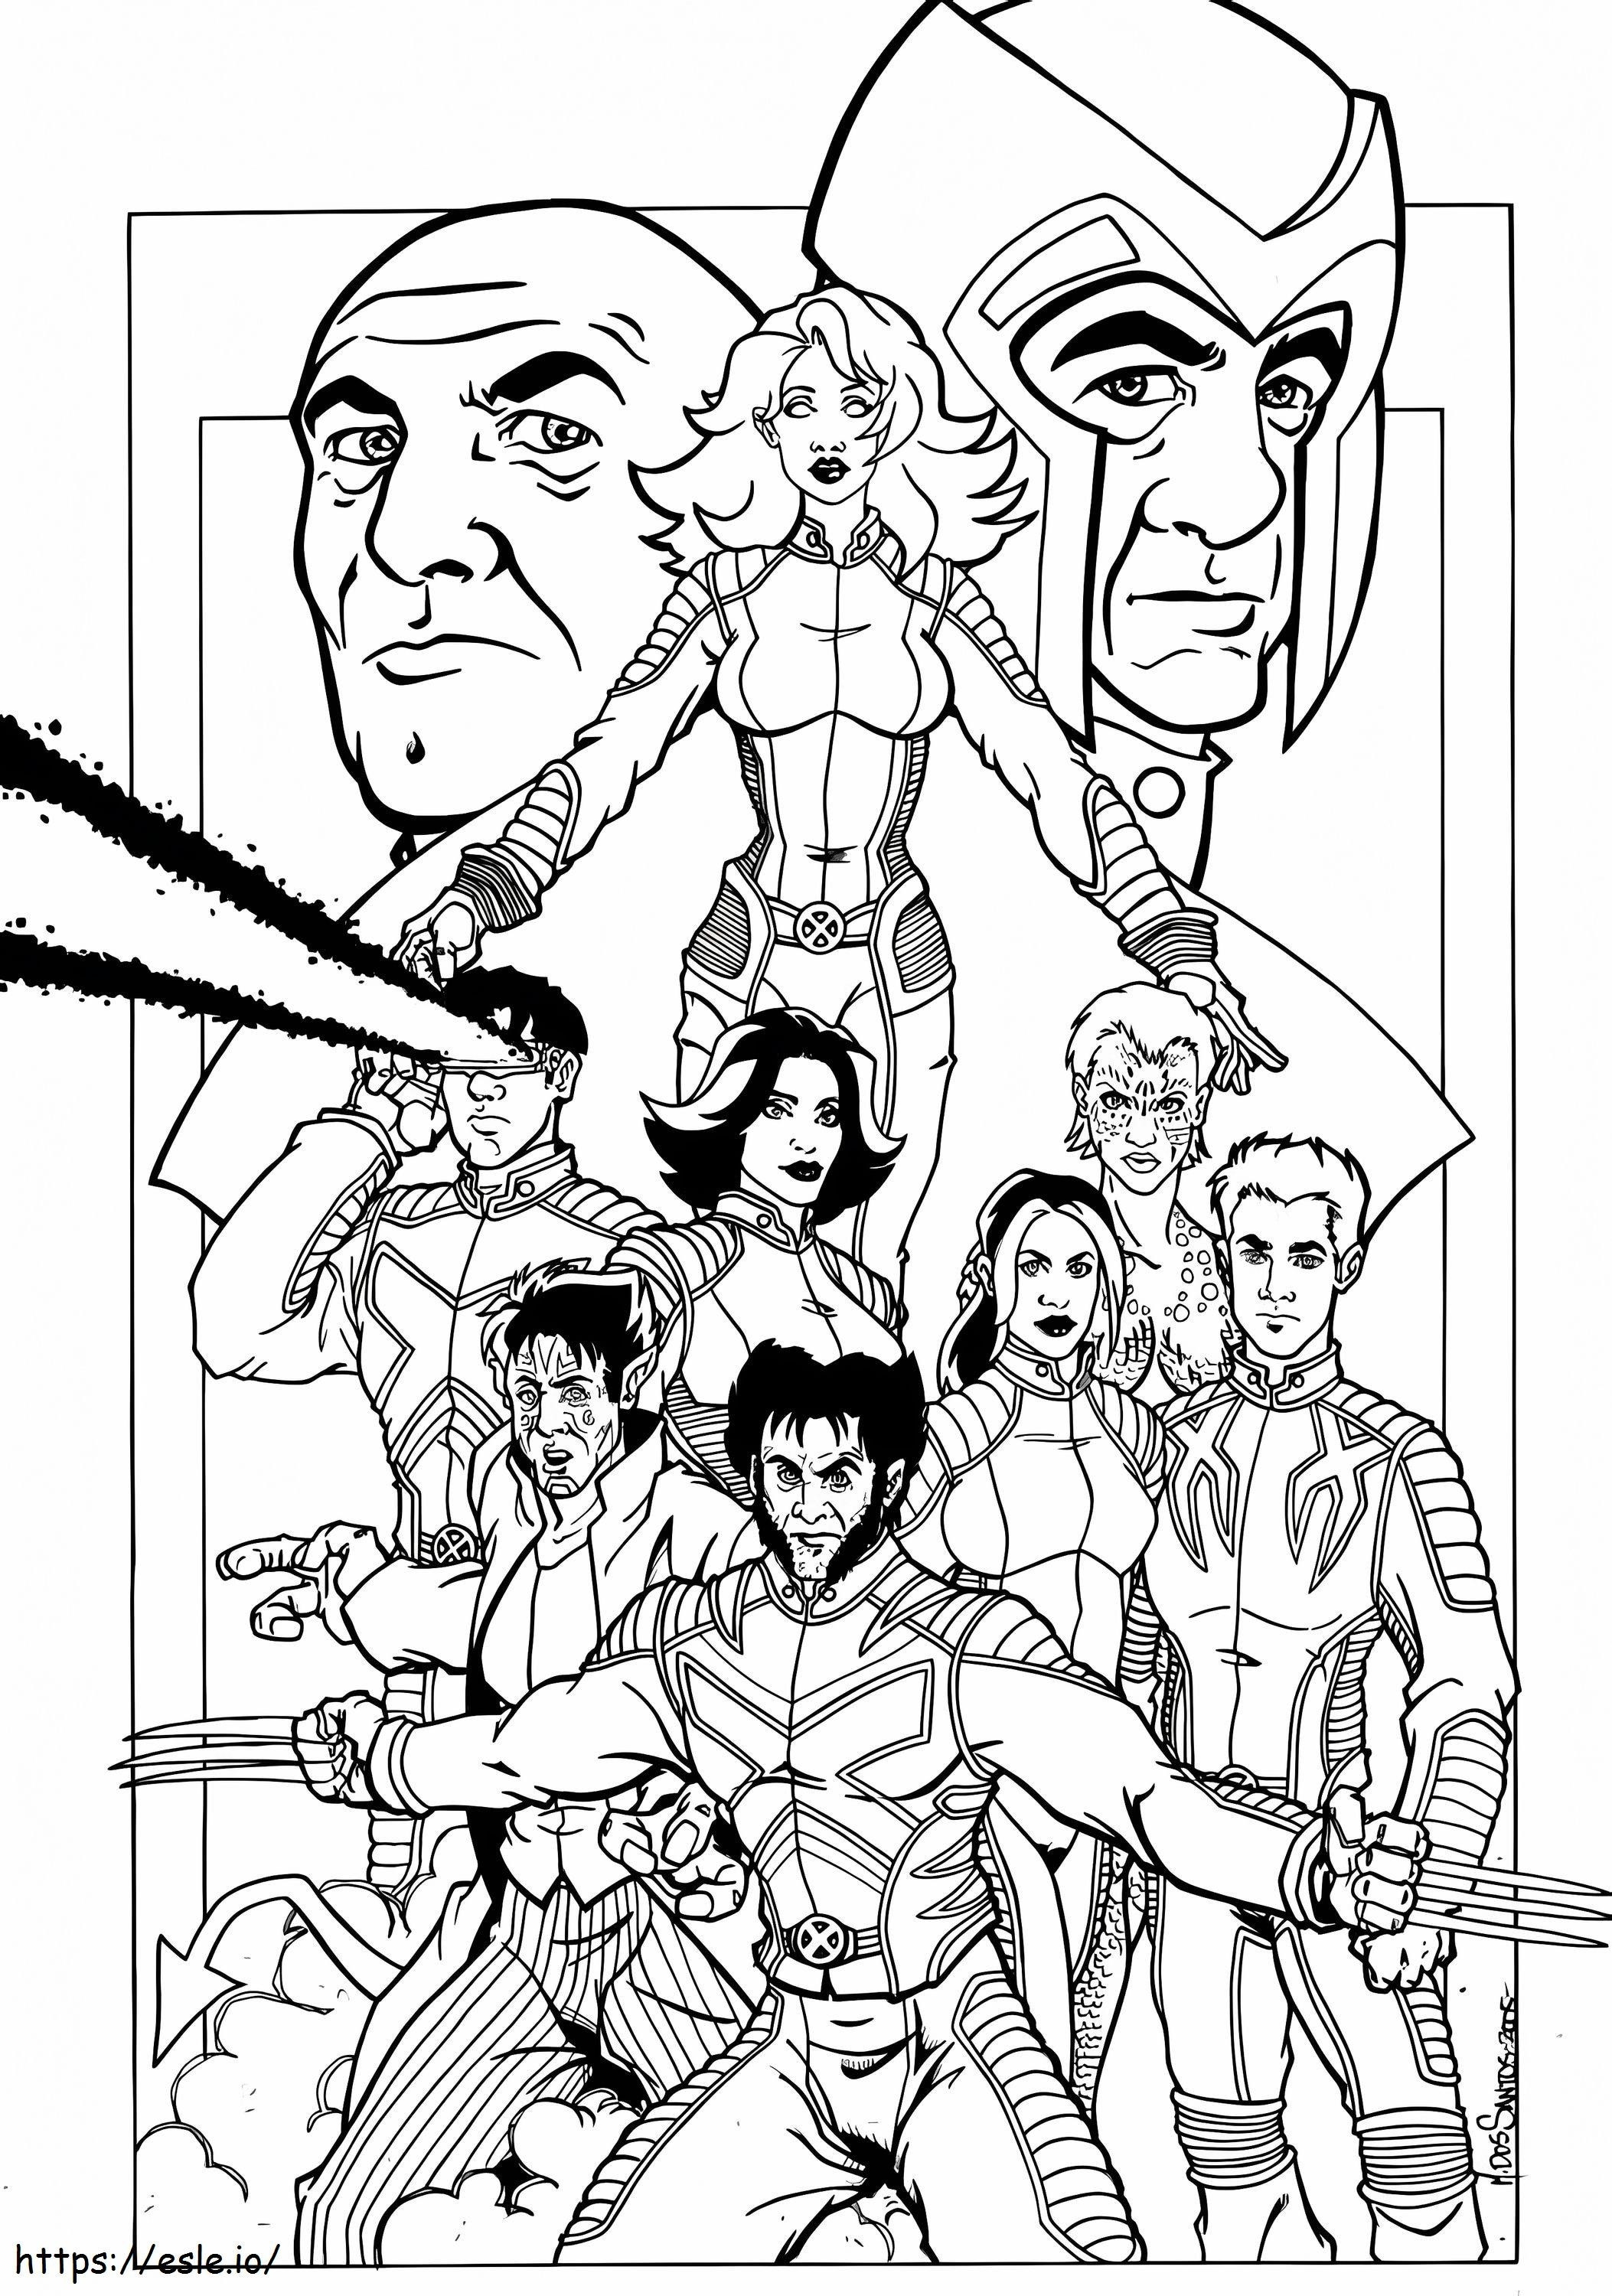 X-Men Team coloring page